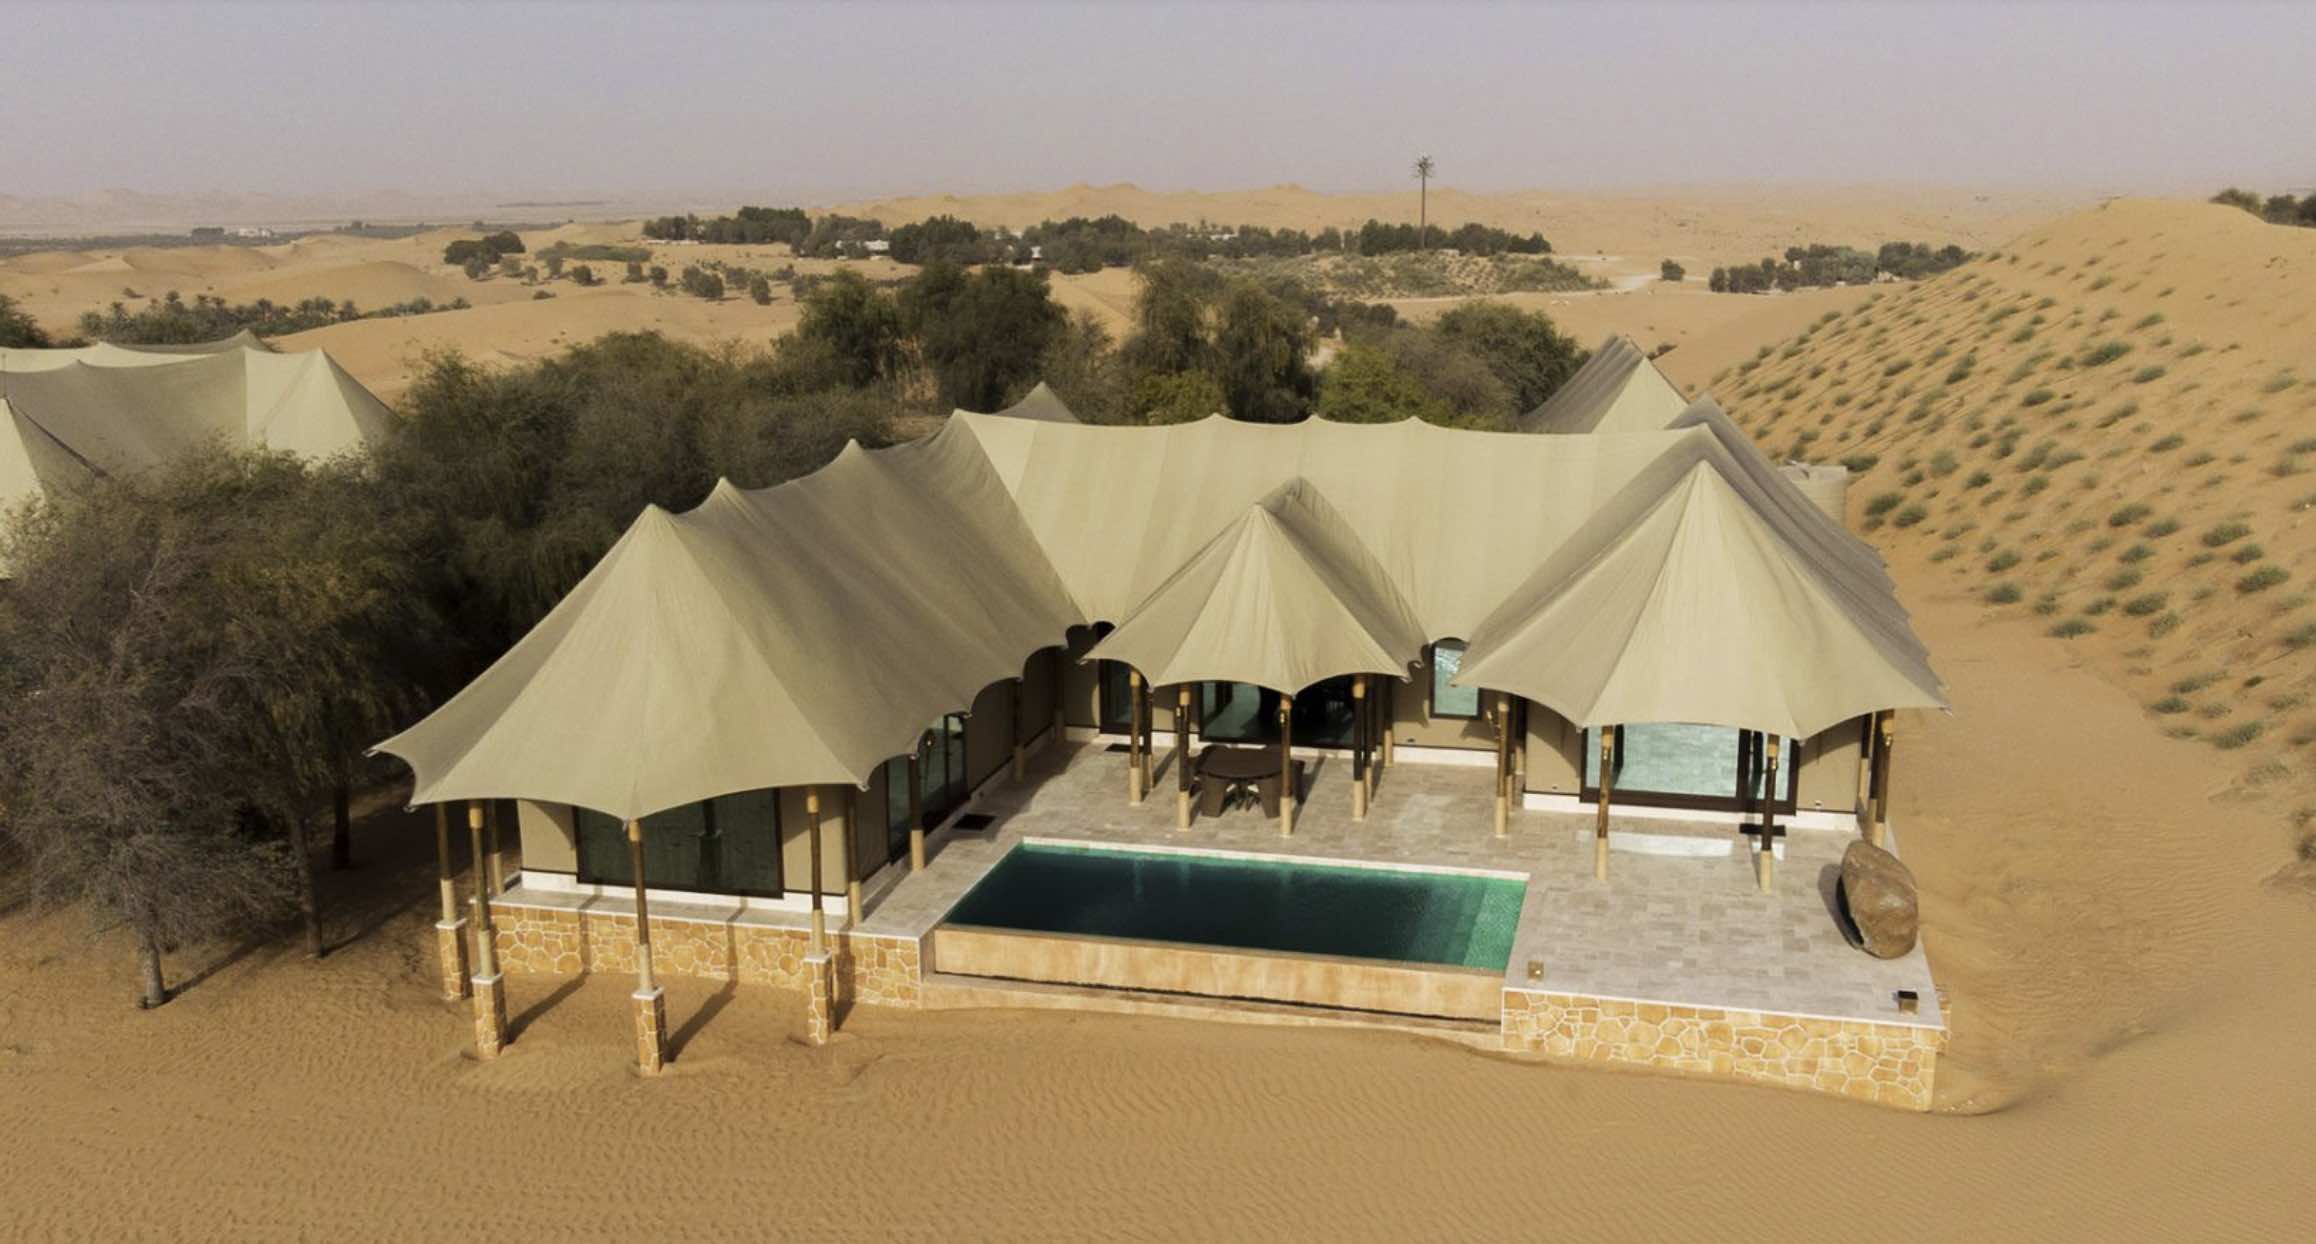 Telal desert resorts in the UAE